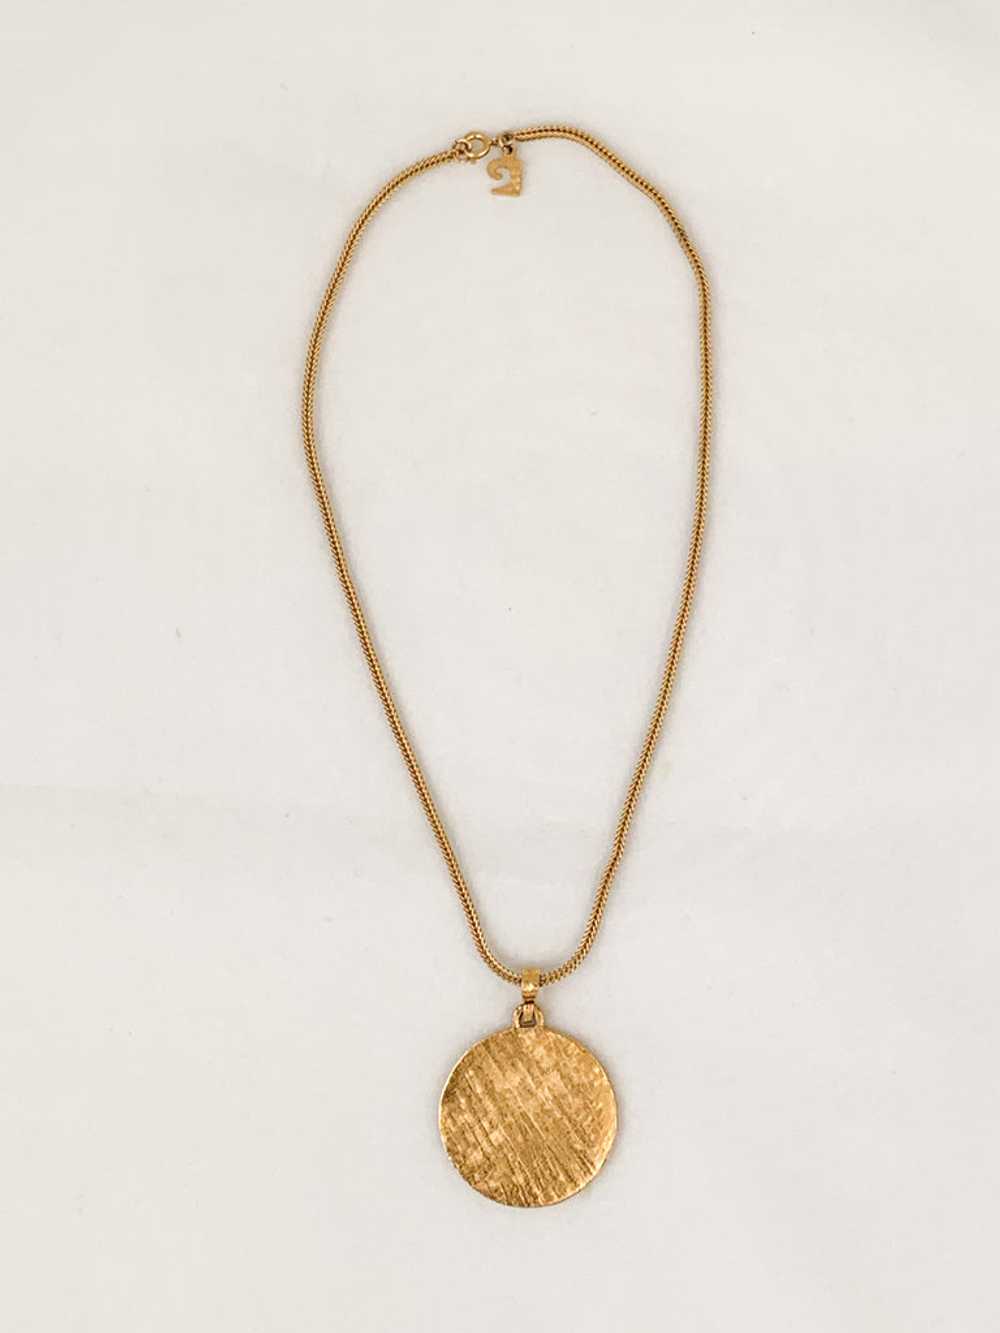 Pierre Cardin Gold Swirl Necklace - image 5